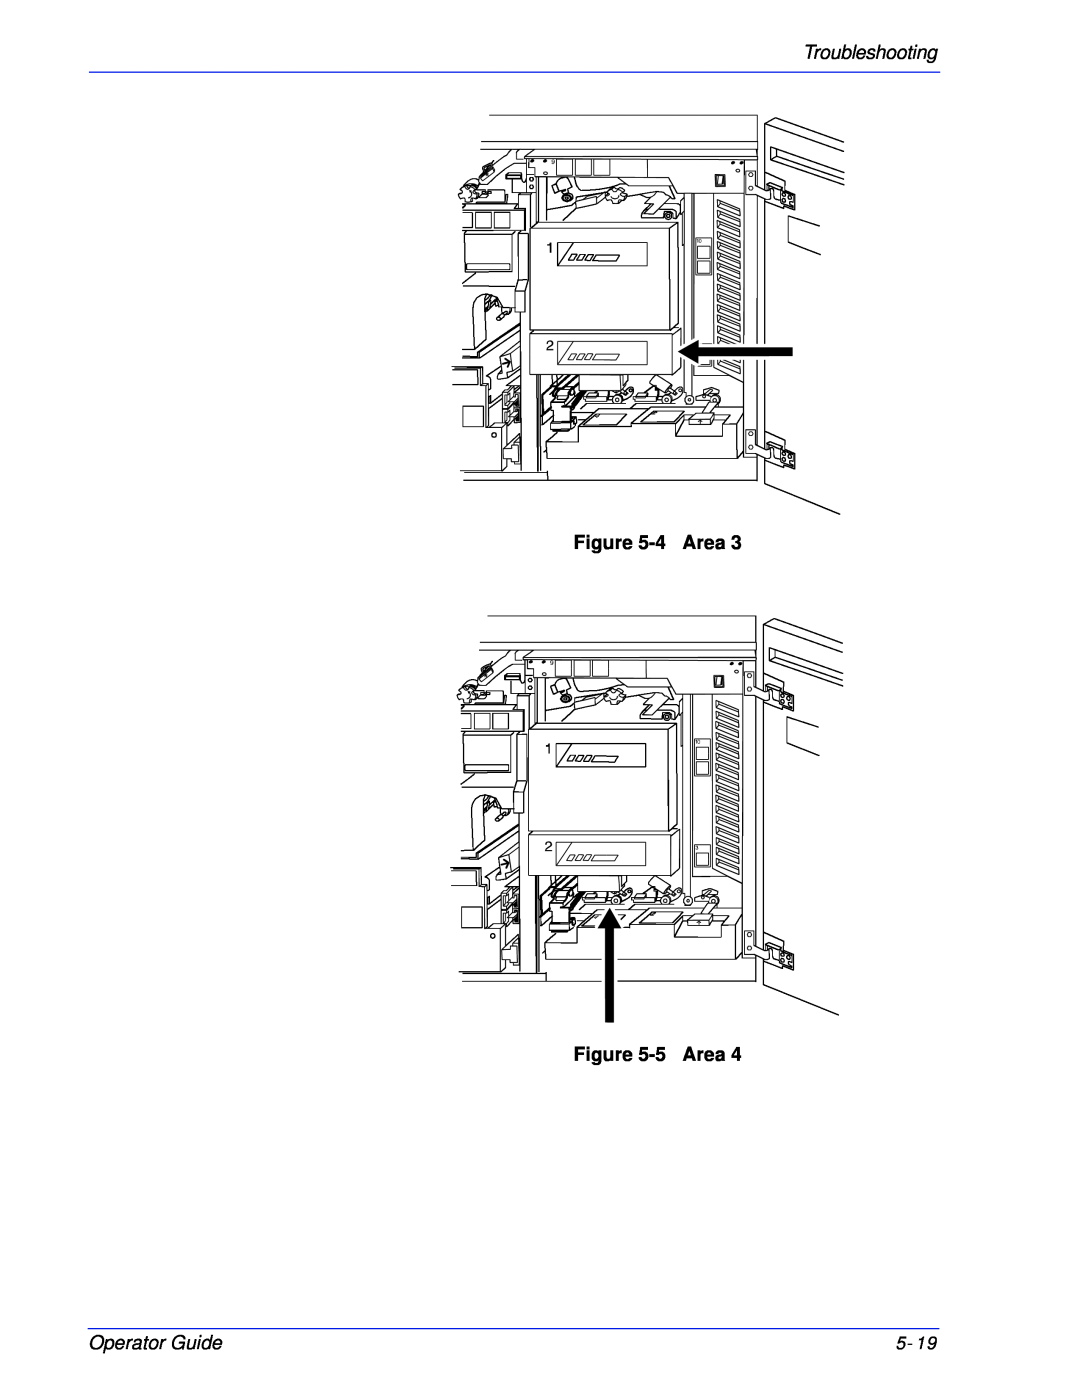 Xerox 180 EPS, 100 manual Troubleshooting, 4Area -5Area, Operator Guide 